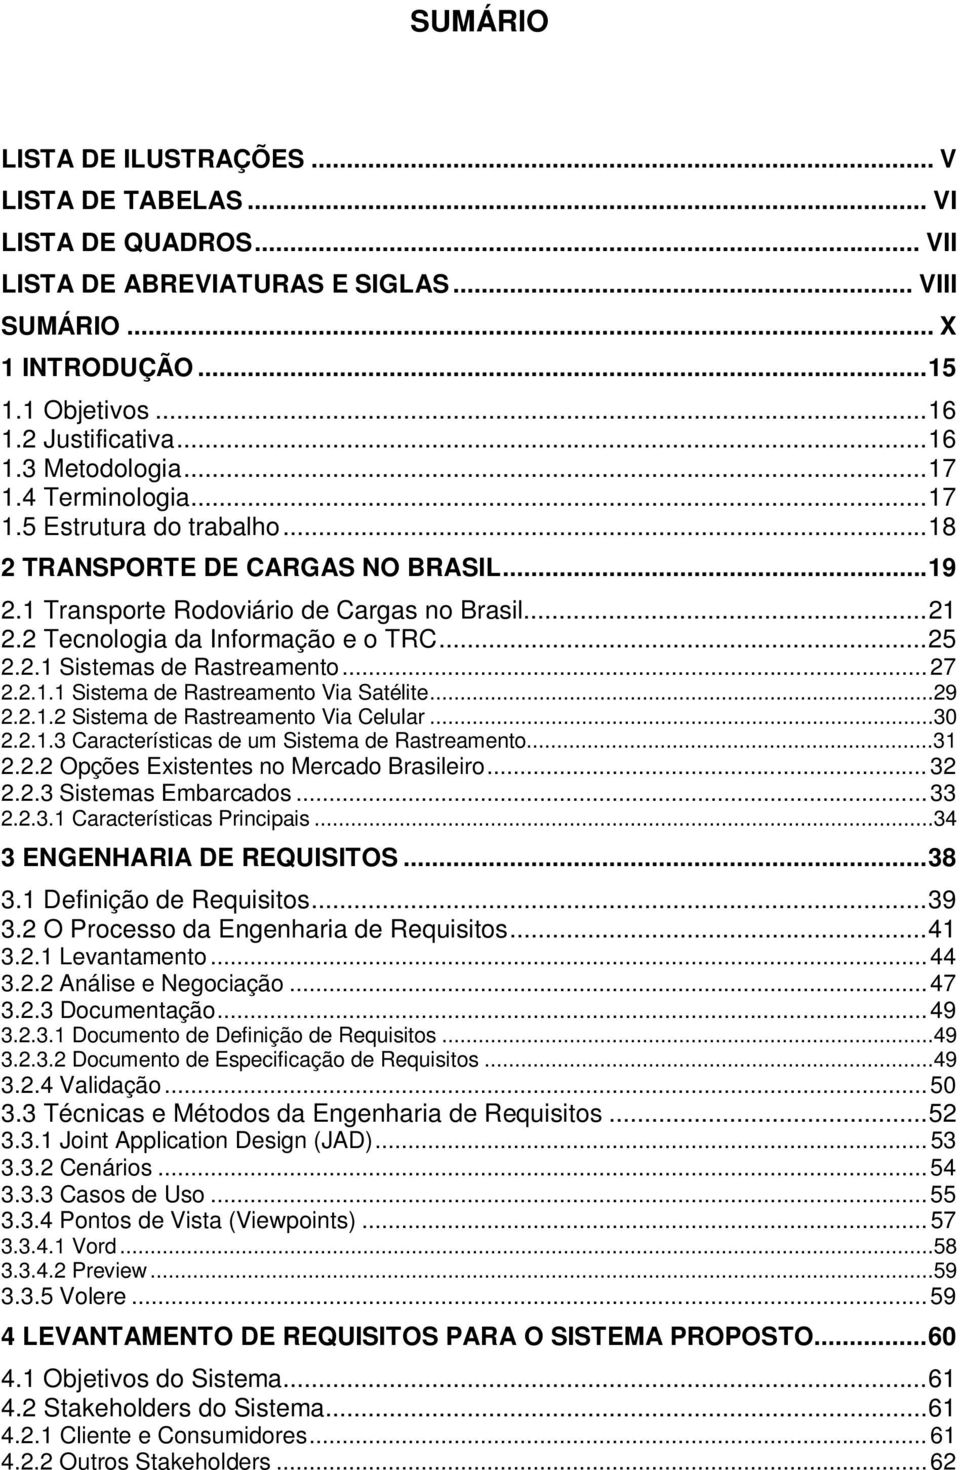 ..27 2.2.1.1 Sistema de Rastreamento Via Satélite...29 2.2.1.2 Sistema de Rastreamento Via Celular...30 2.2.1.3 Características de um Sistema de Rastreamento...31 2.2.2 Opções Existentes no Mercado Brasileiro.